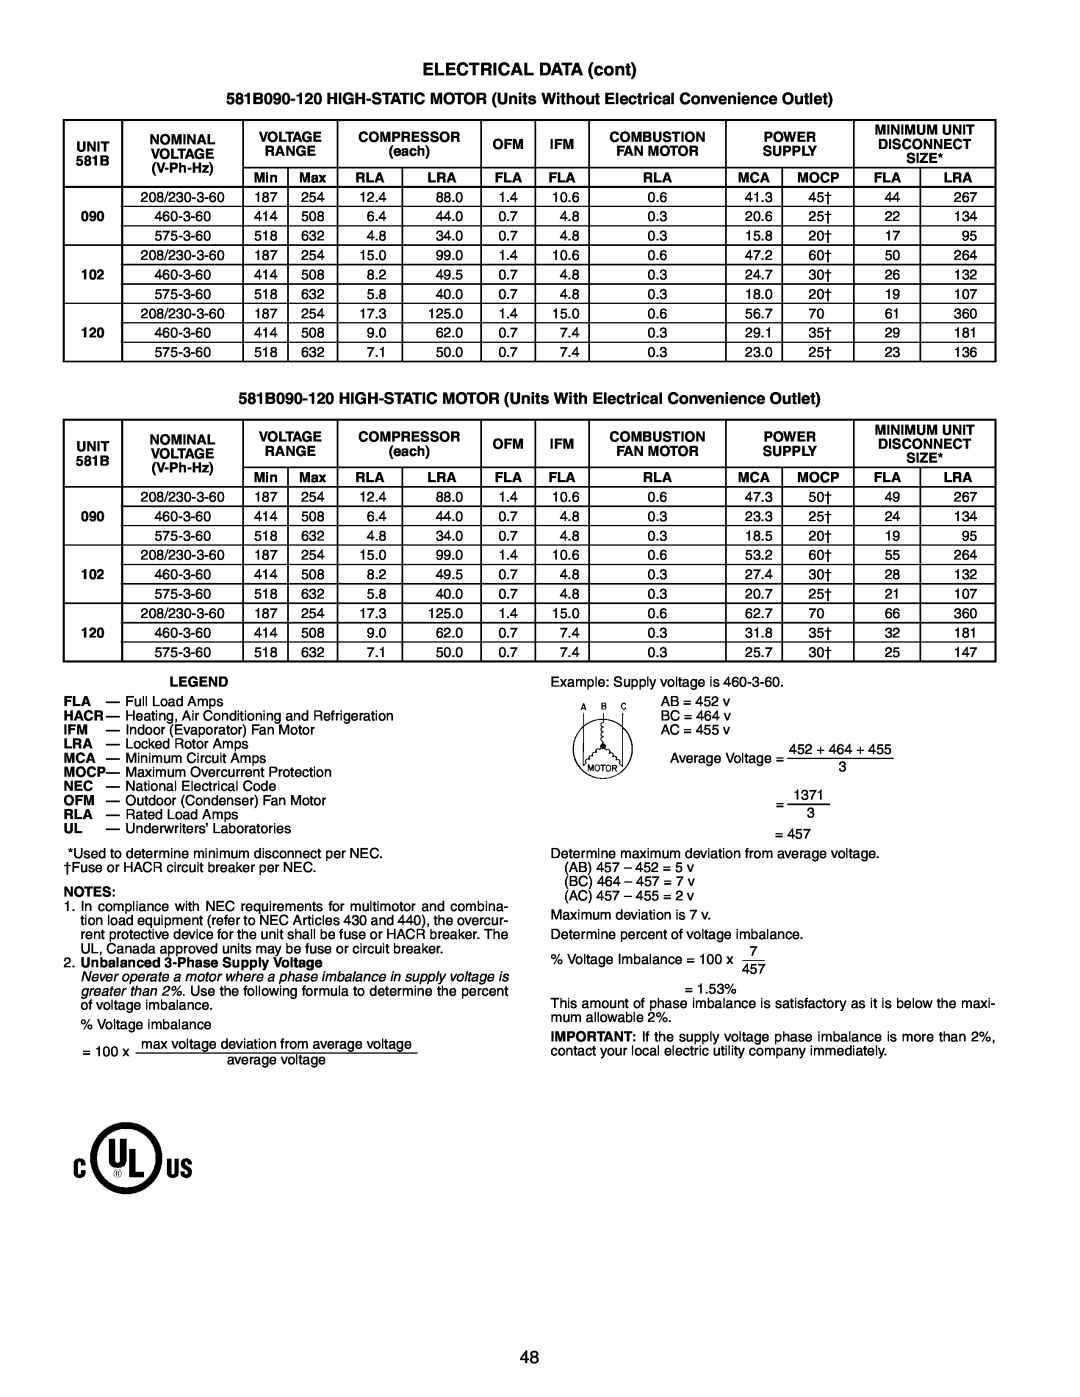 Bryant 581B manual ELECTRICAL DATA cont, 12.4 